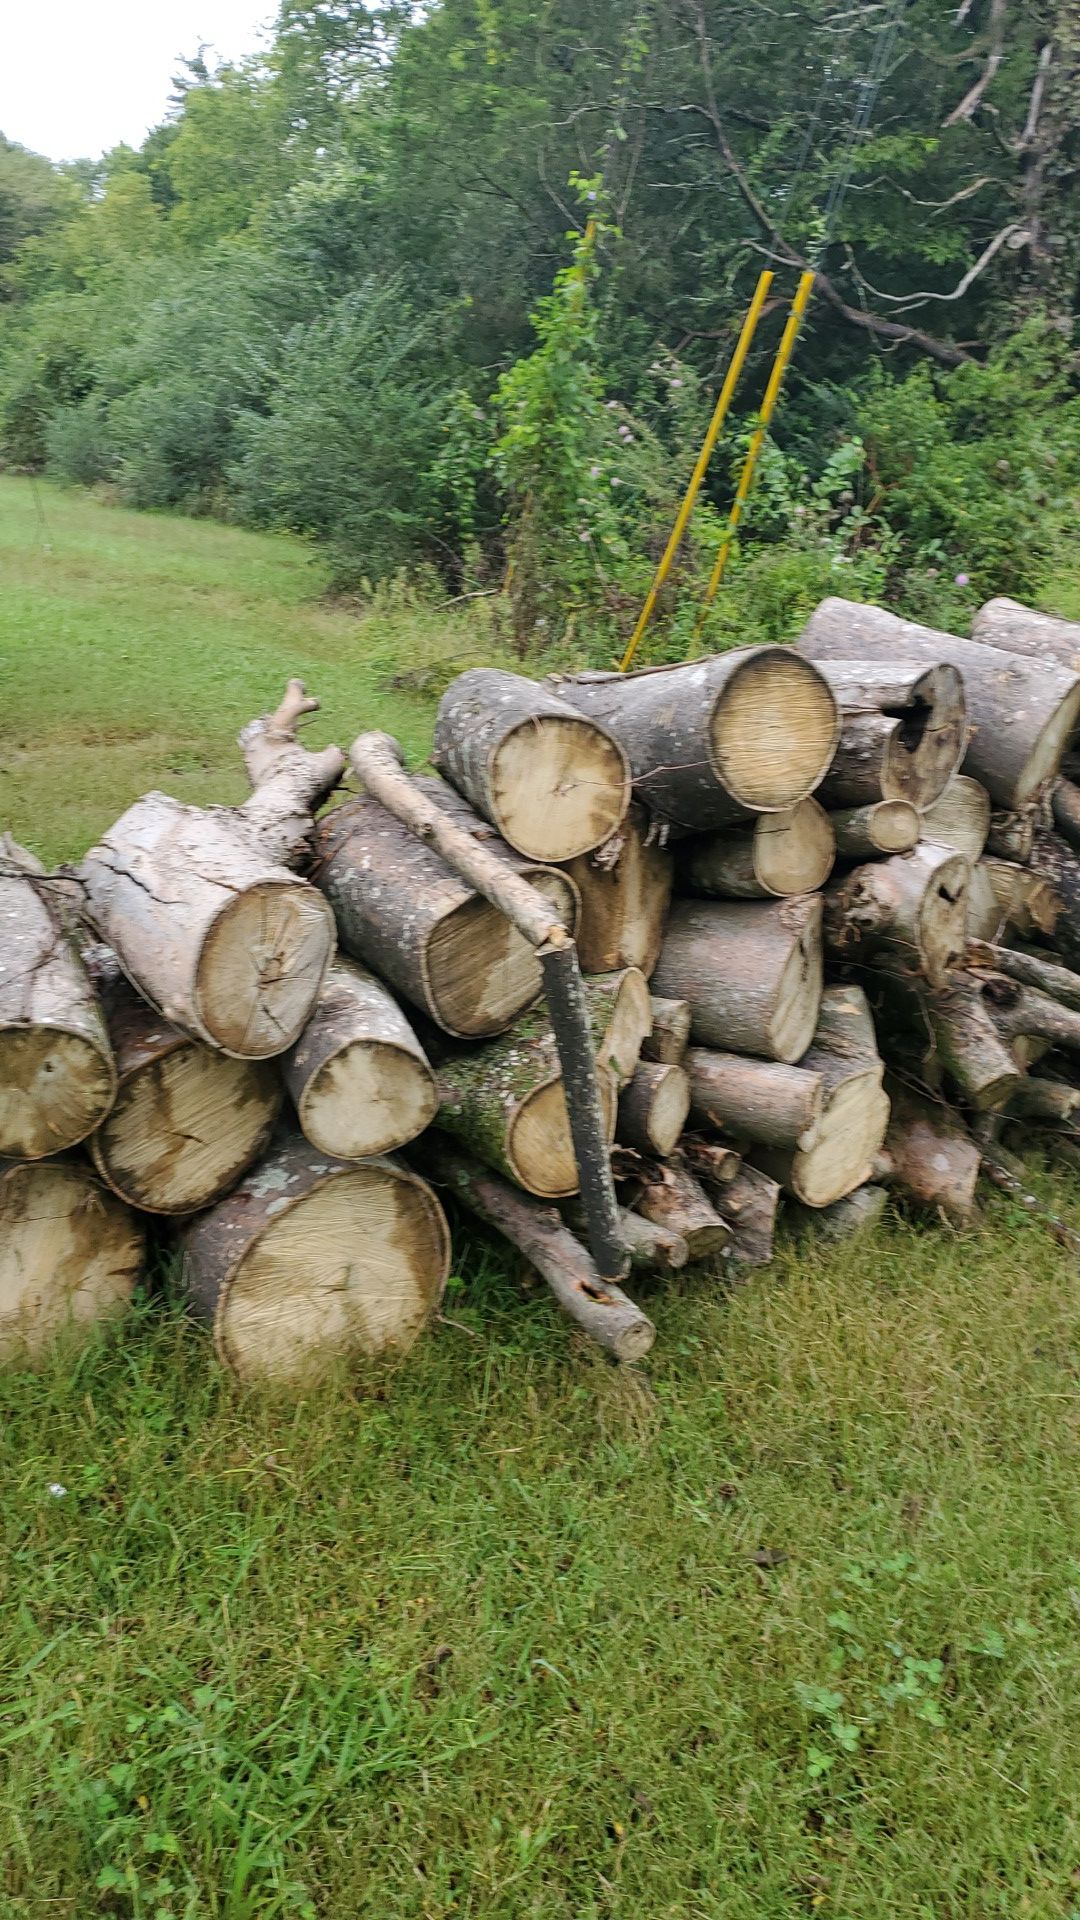 Free firewood